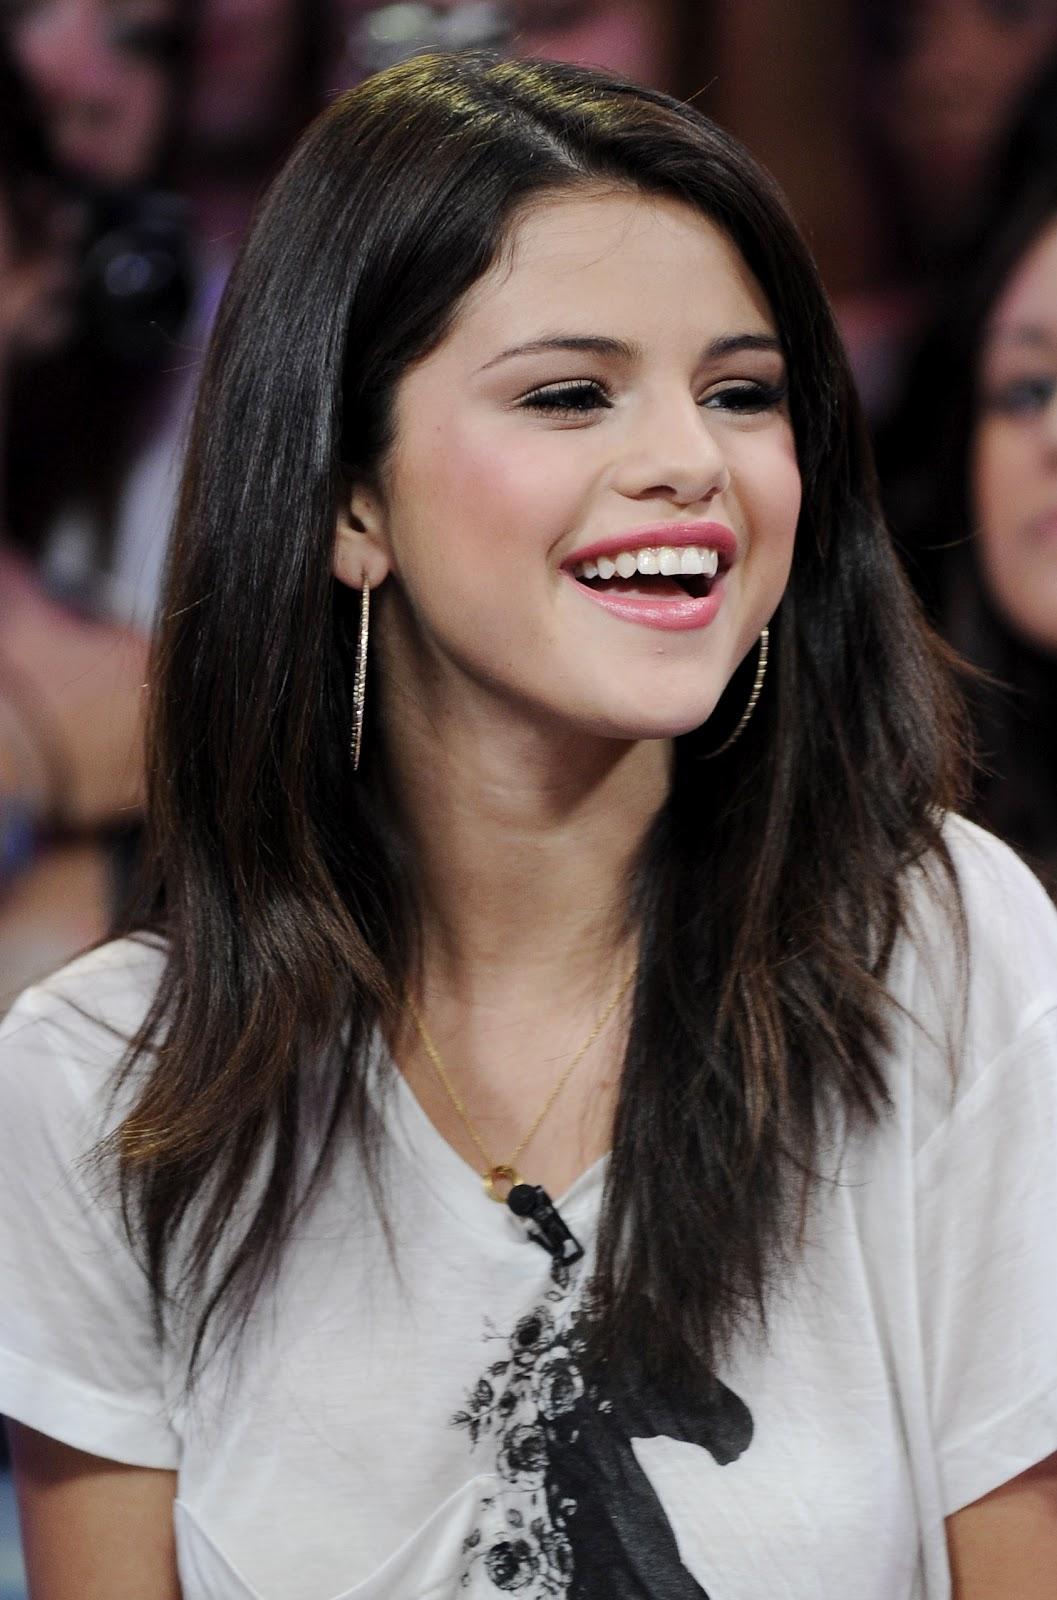 Selena Gomez Wallpaper and Picture 2012: Selena Gomez beautiful